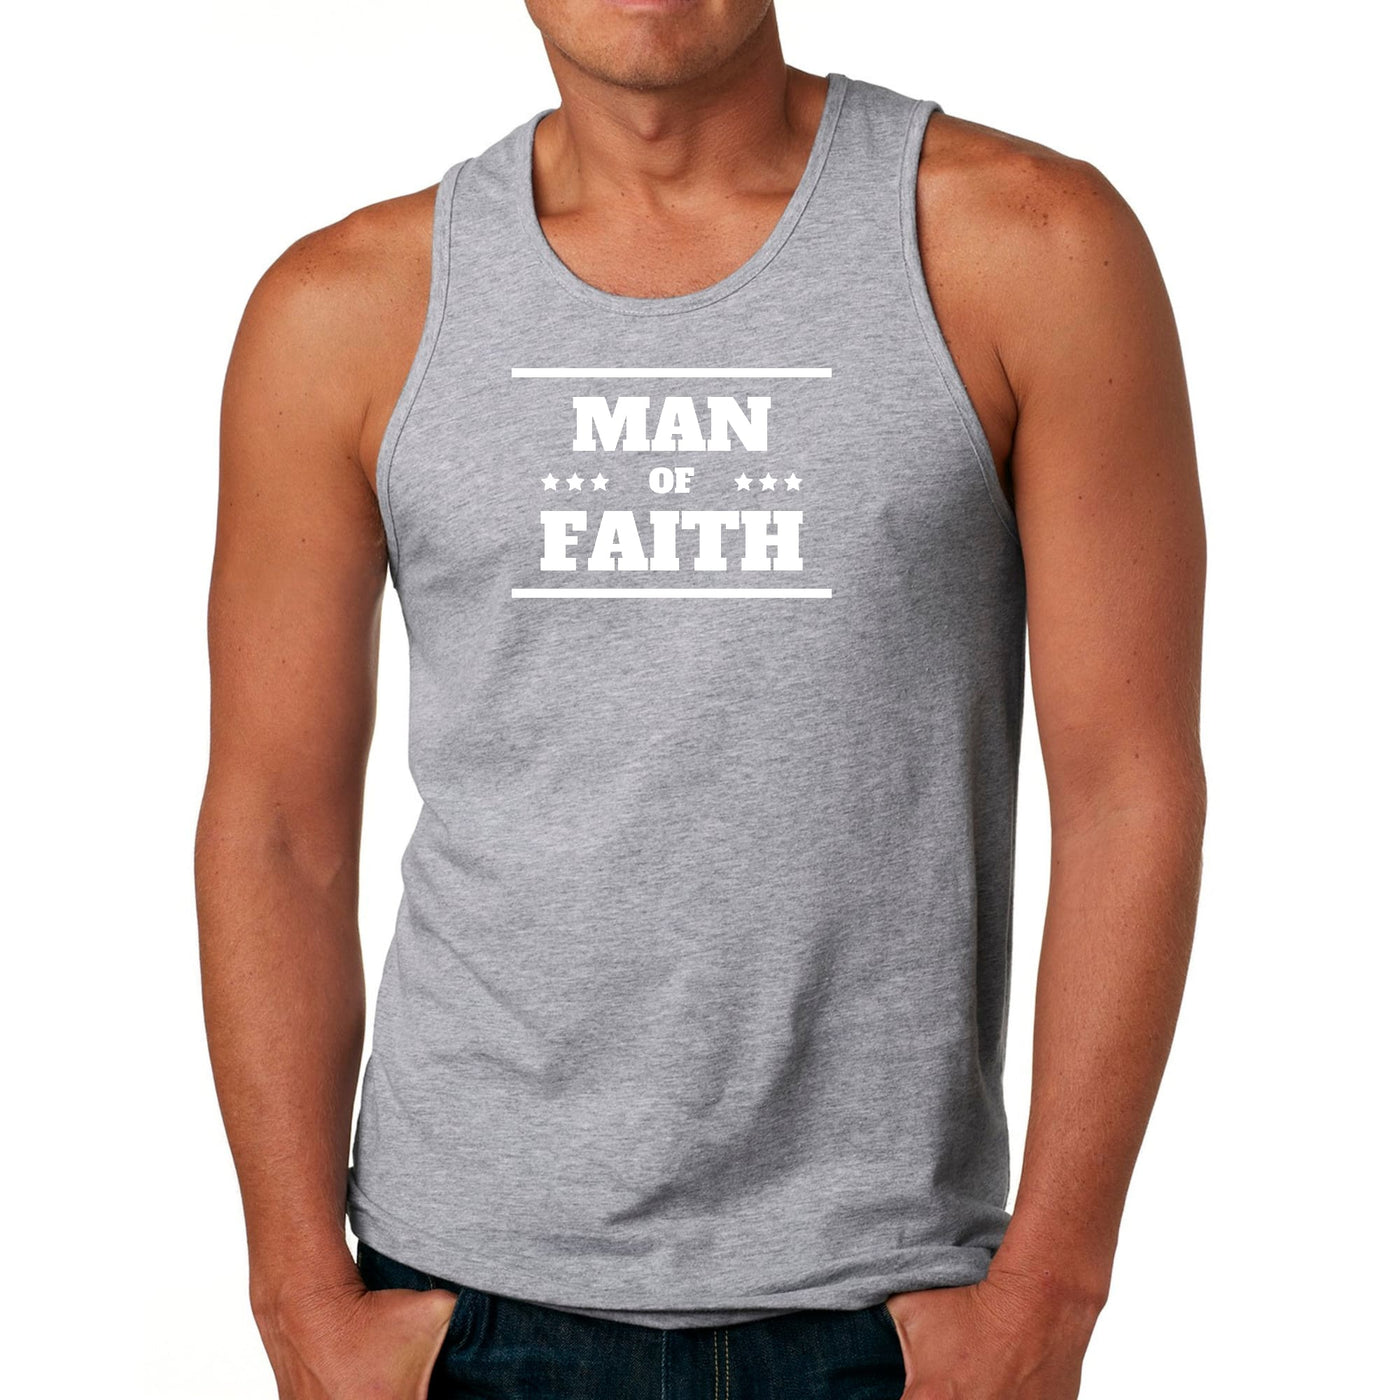 Mens Tank Top Fitness T - shirt Man Of Faith - Tops